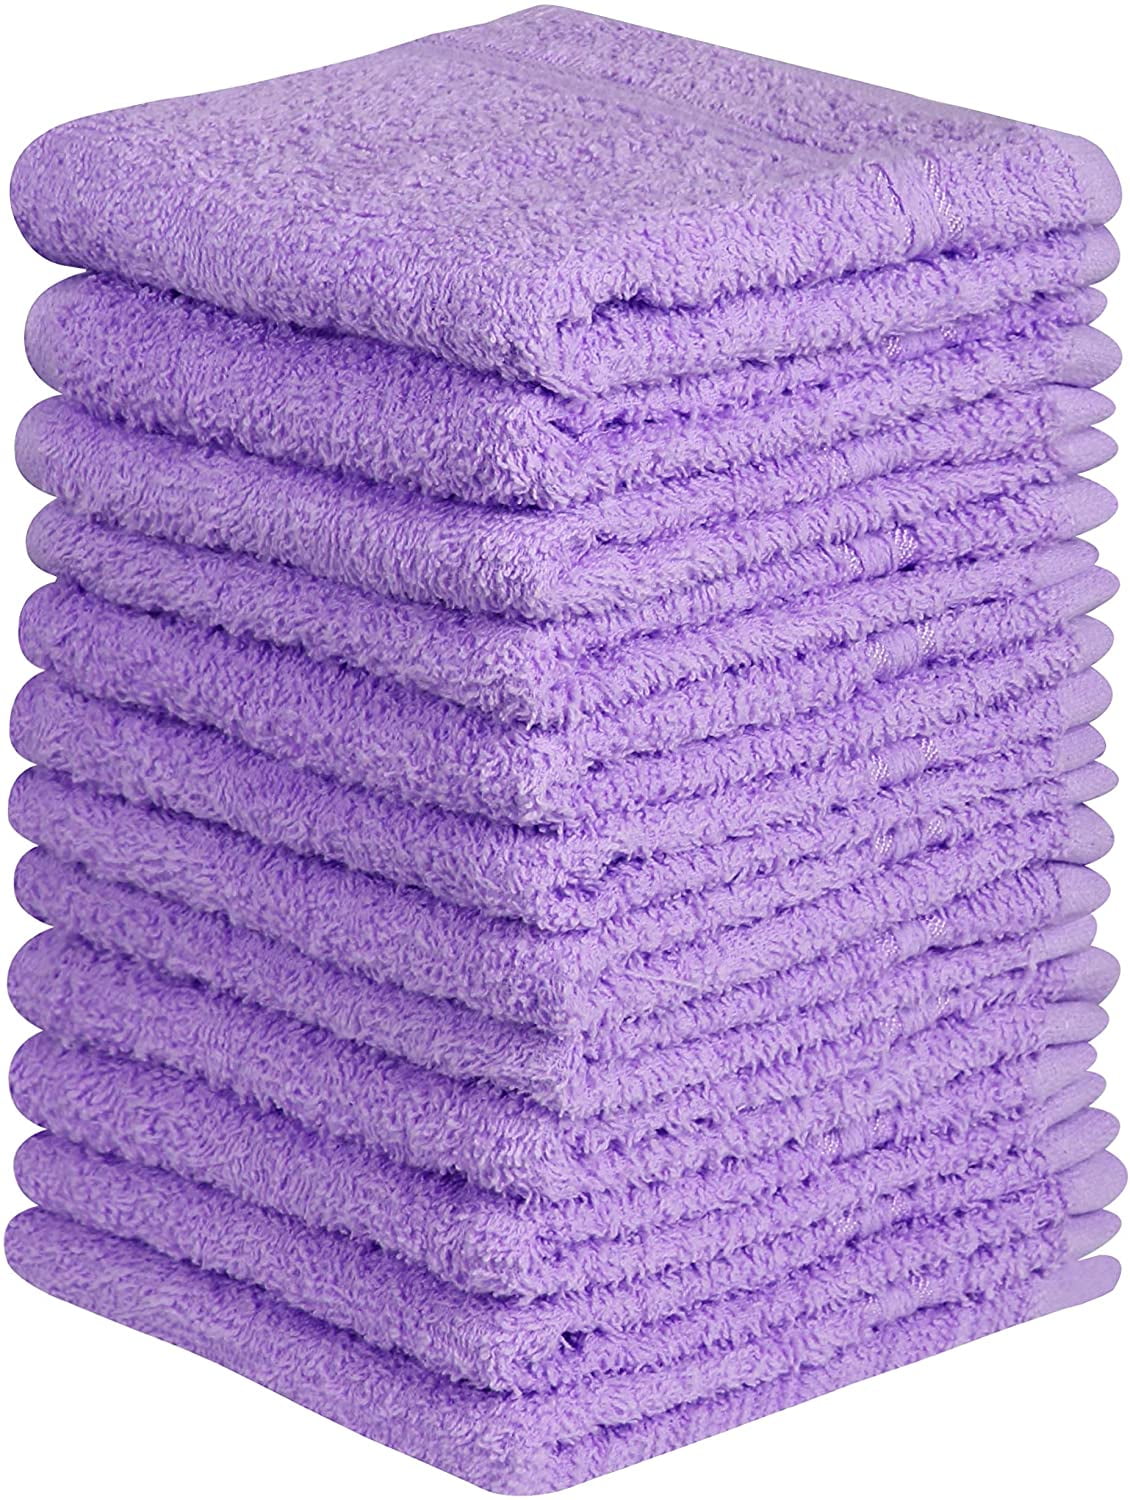 Kess InHouse EBI Emporium White Noise 3 Purple Magenta Round Beach Towel Blanket